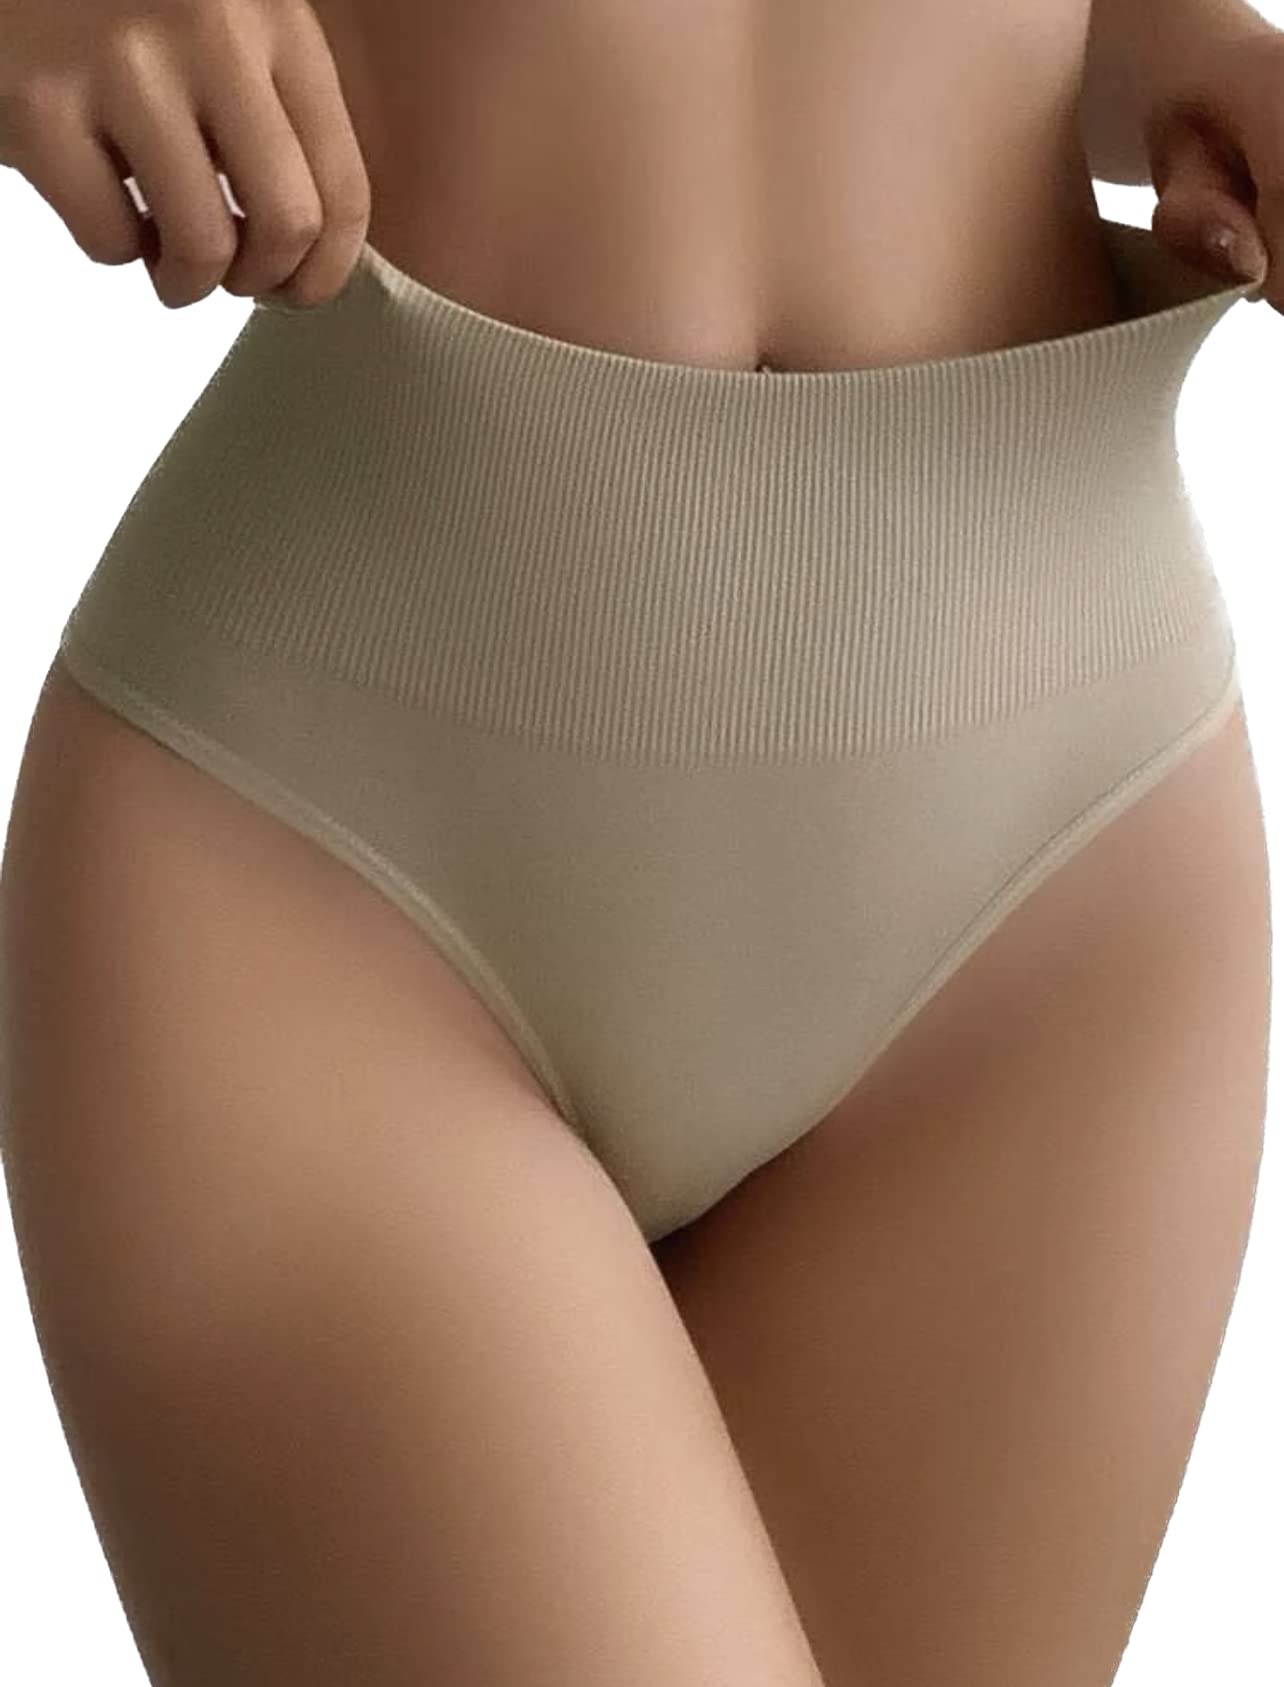 Femica - Panty Faja para Mujer de Compresi?n Abdomen Invisible - Calzon  Control Cintura - Moldea la Figura Silueta - Shapewear